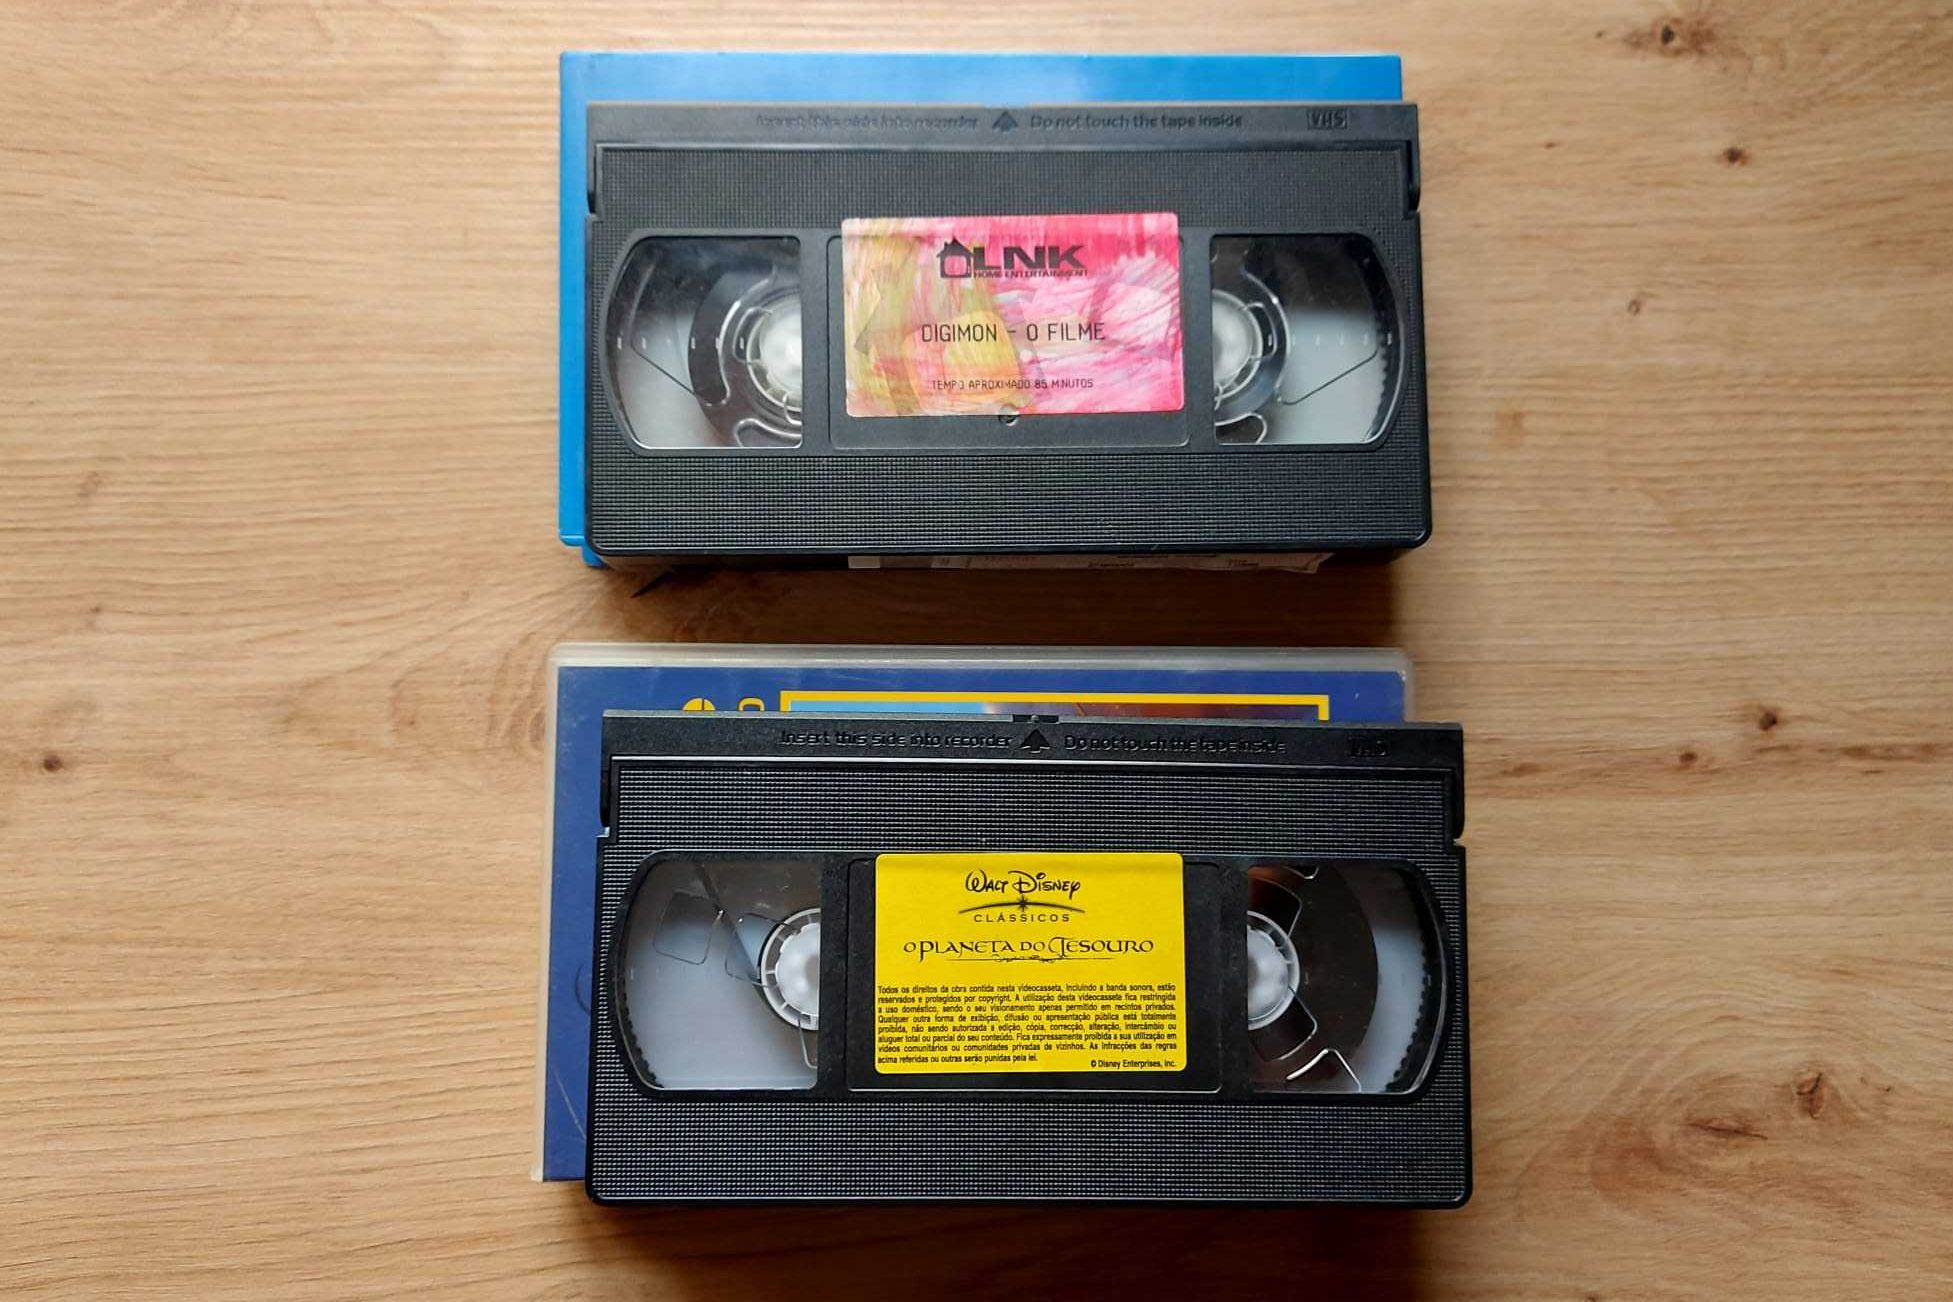 Digimon 1 1999 - O Filme & Planeta do Tesouro Cassetes VHS